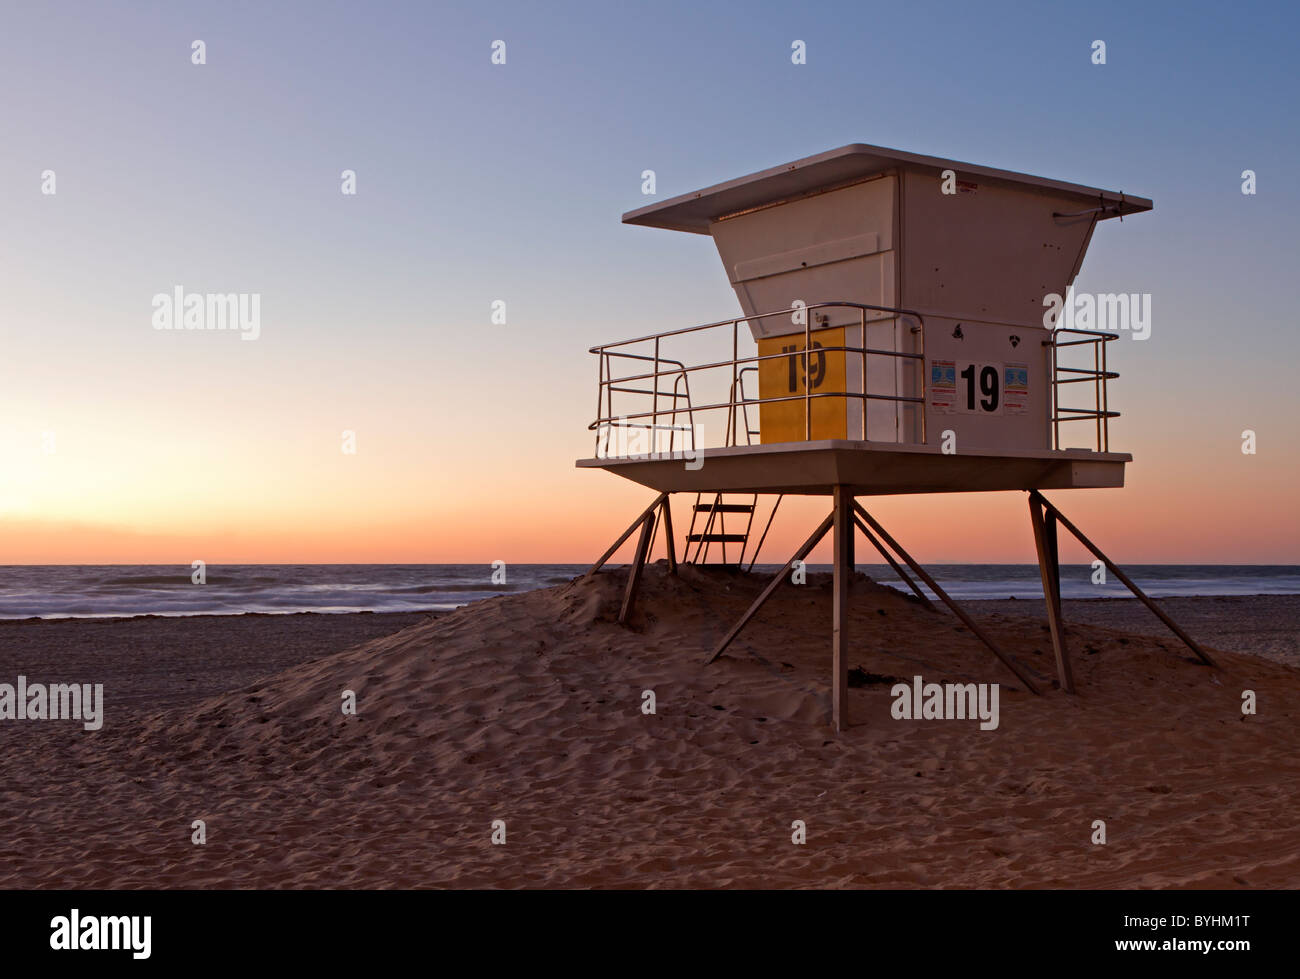 Guard tower at a beach, California, USA Stock Photo